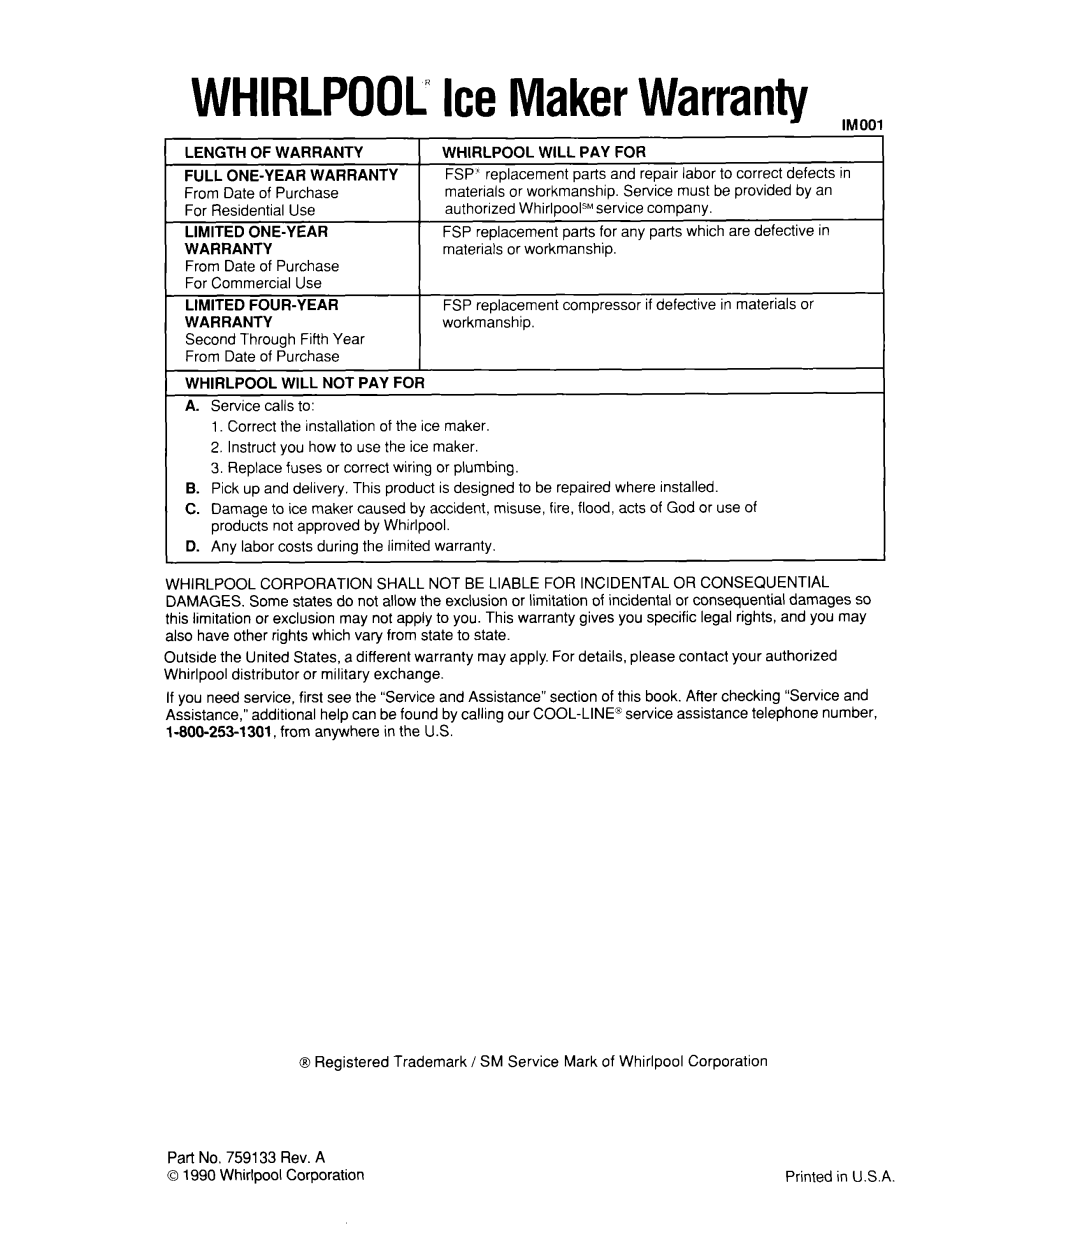 Whirlpool EC510 manual WHIRLPOOL”IceMakerWarranty 